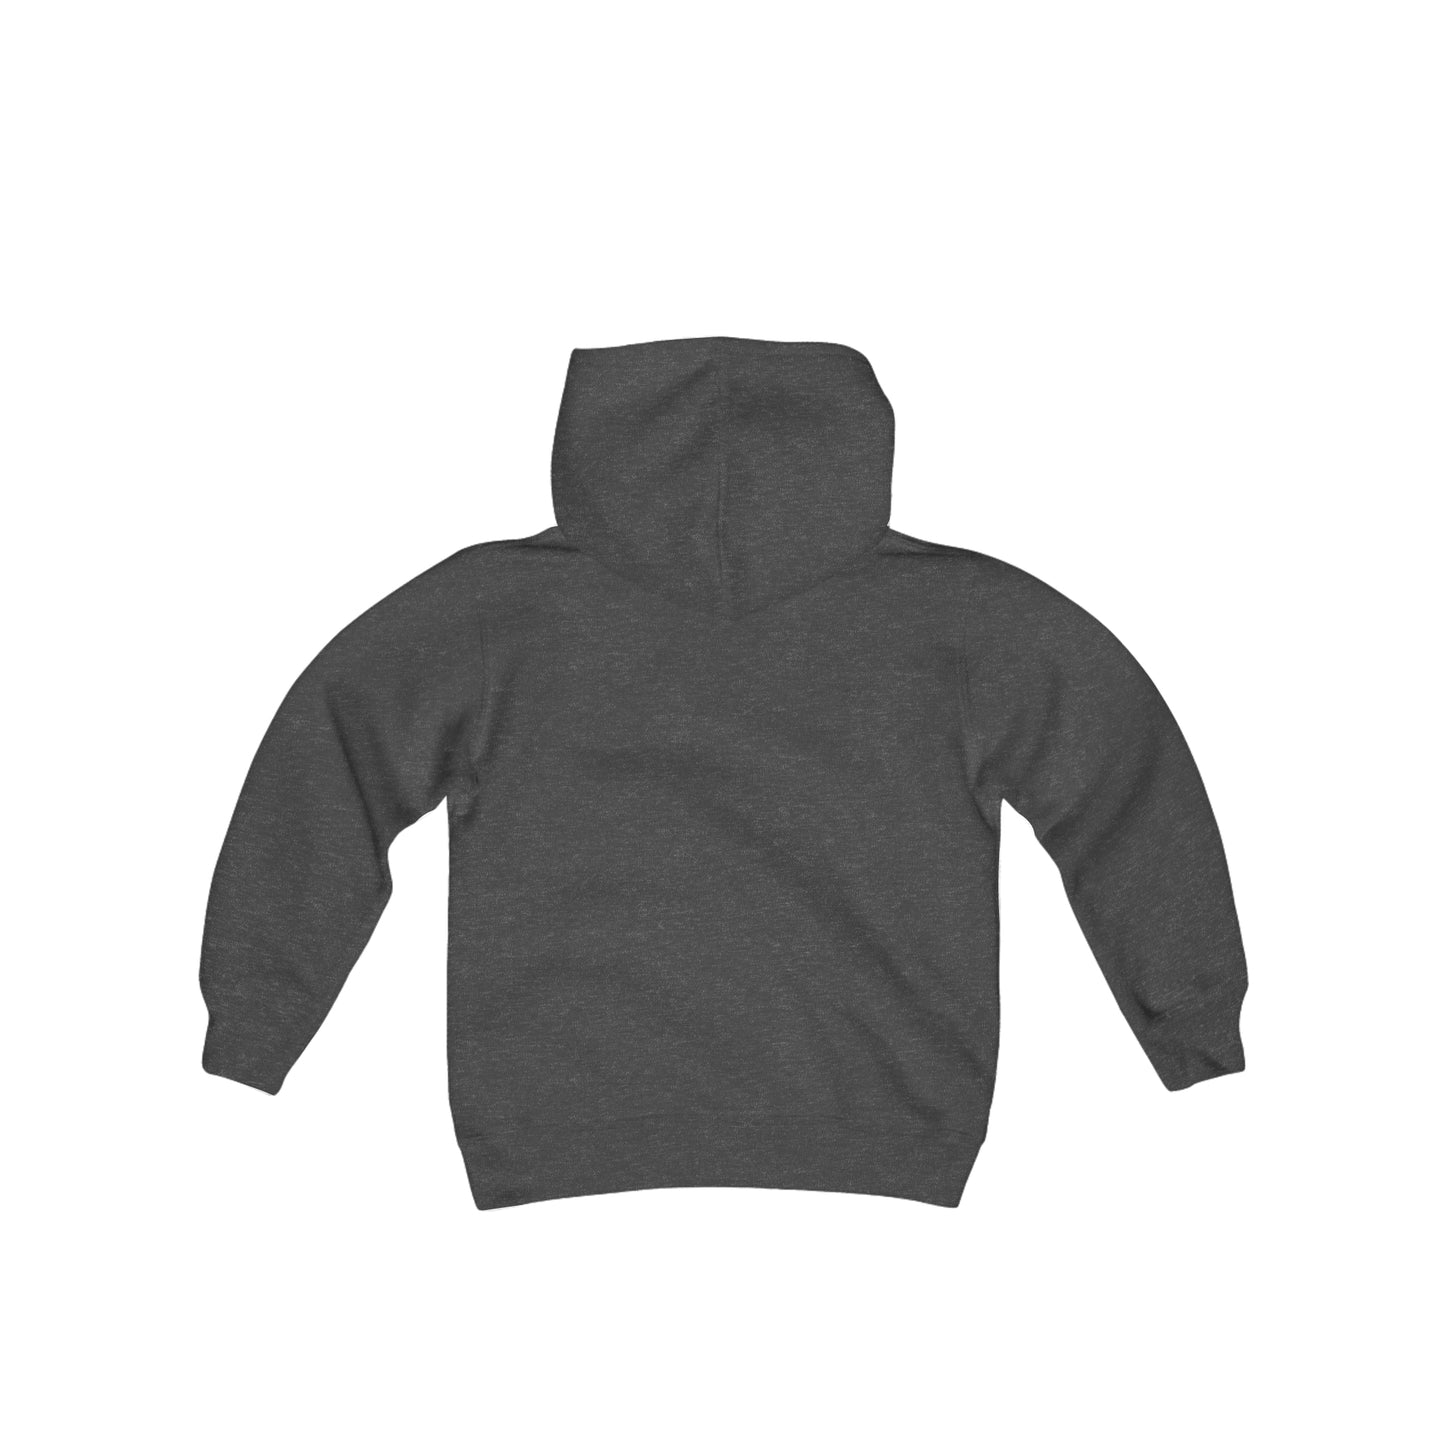 Cloudman  - Girls - Heavy Blend Hooded Sweatshirt  -  Front design